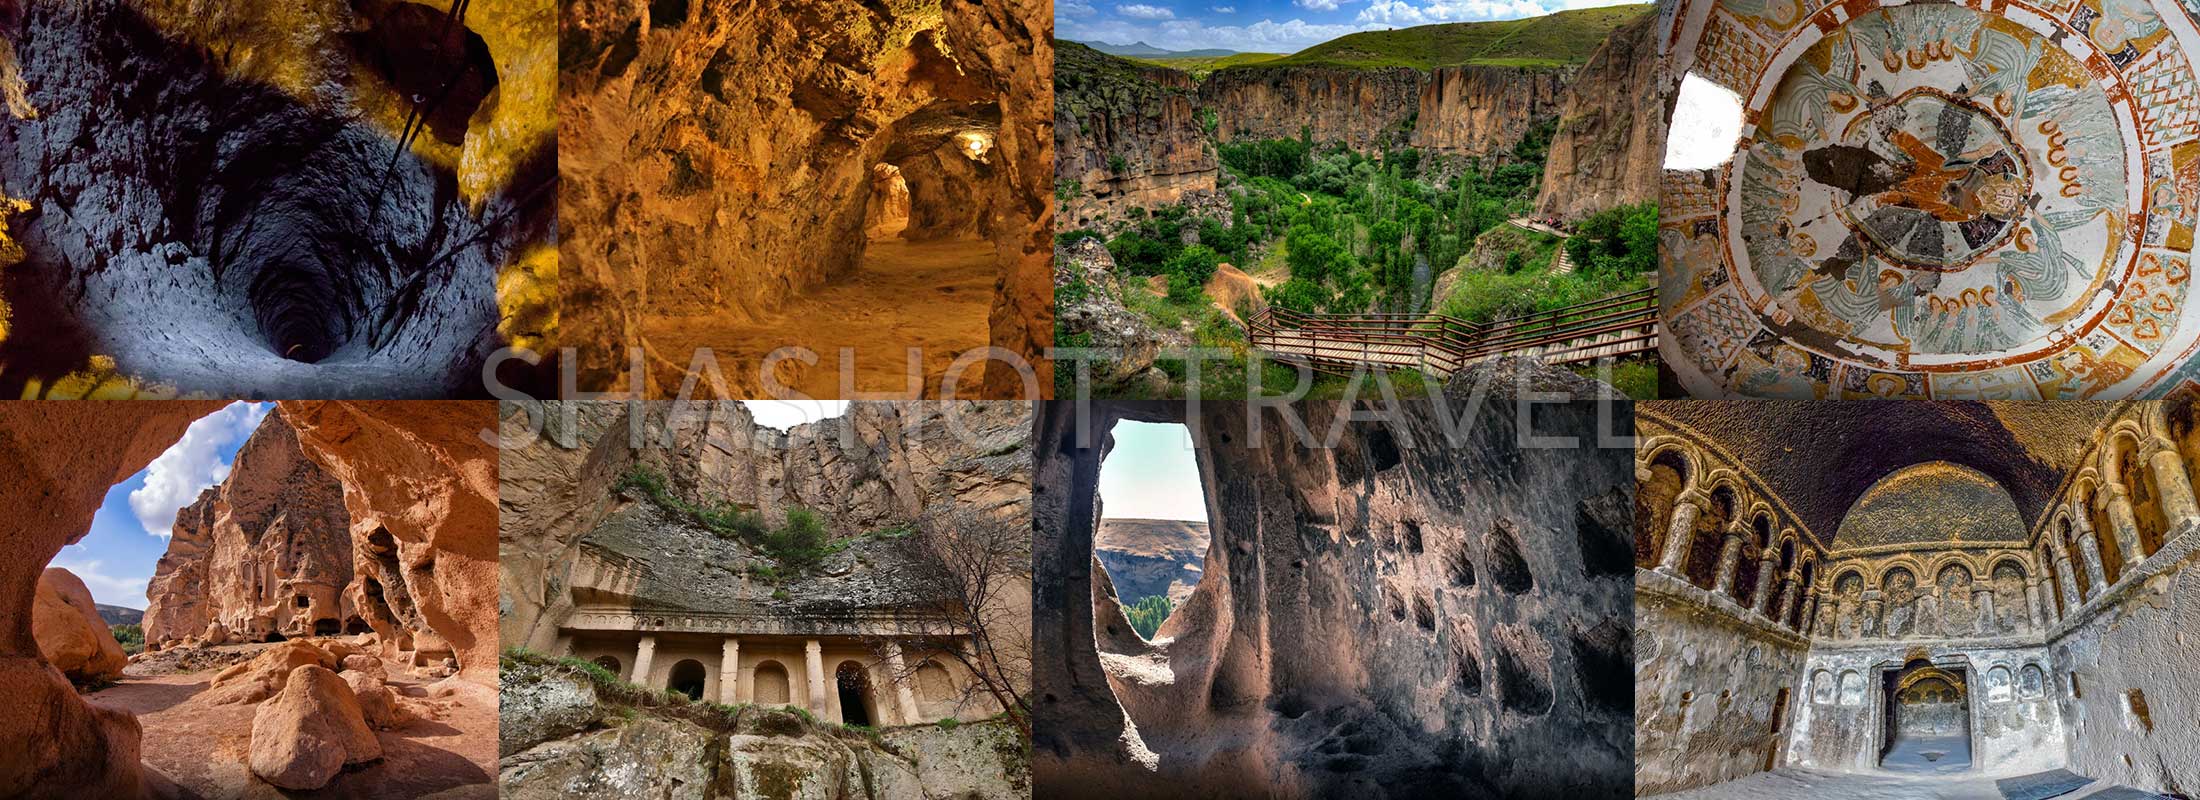 cappadocia-turkey-turkiye-shashot-travel-ihlara-tour